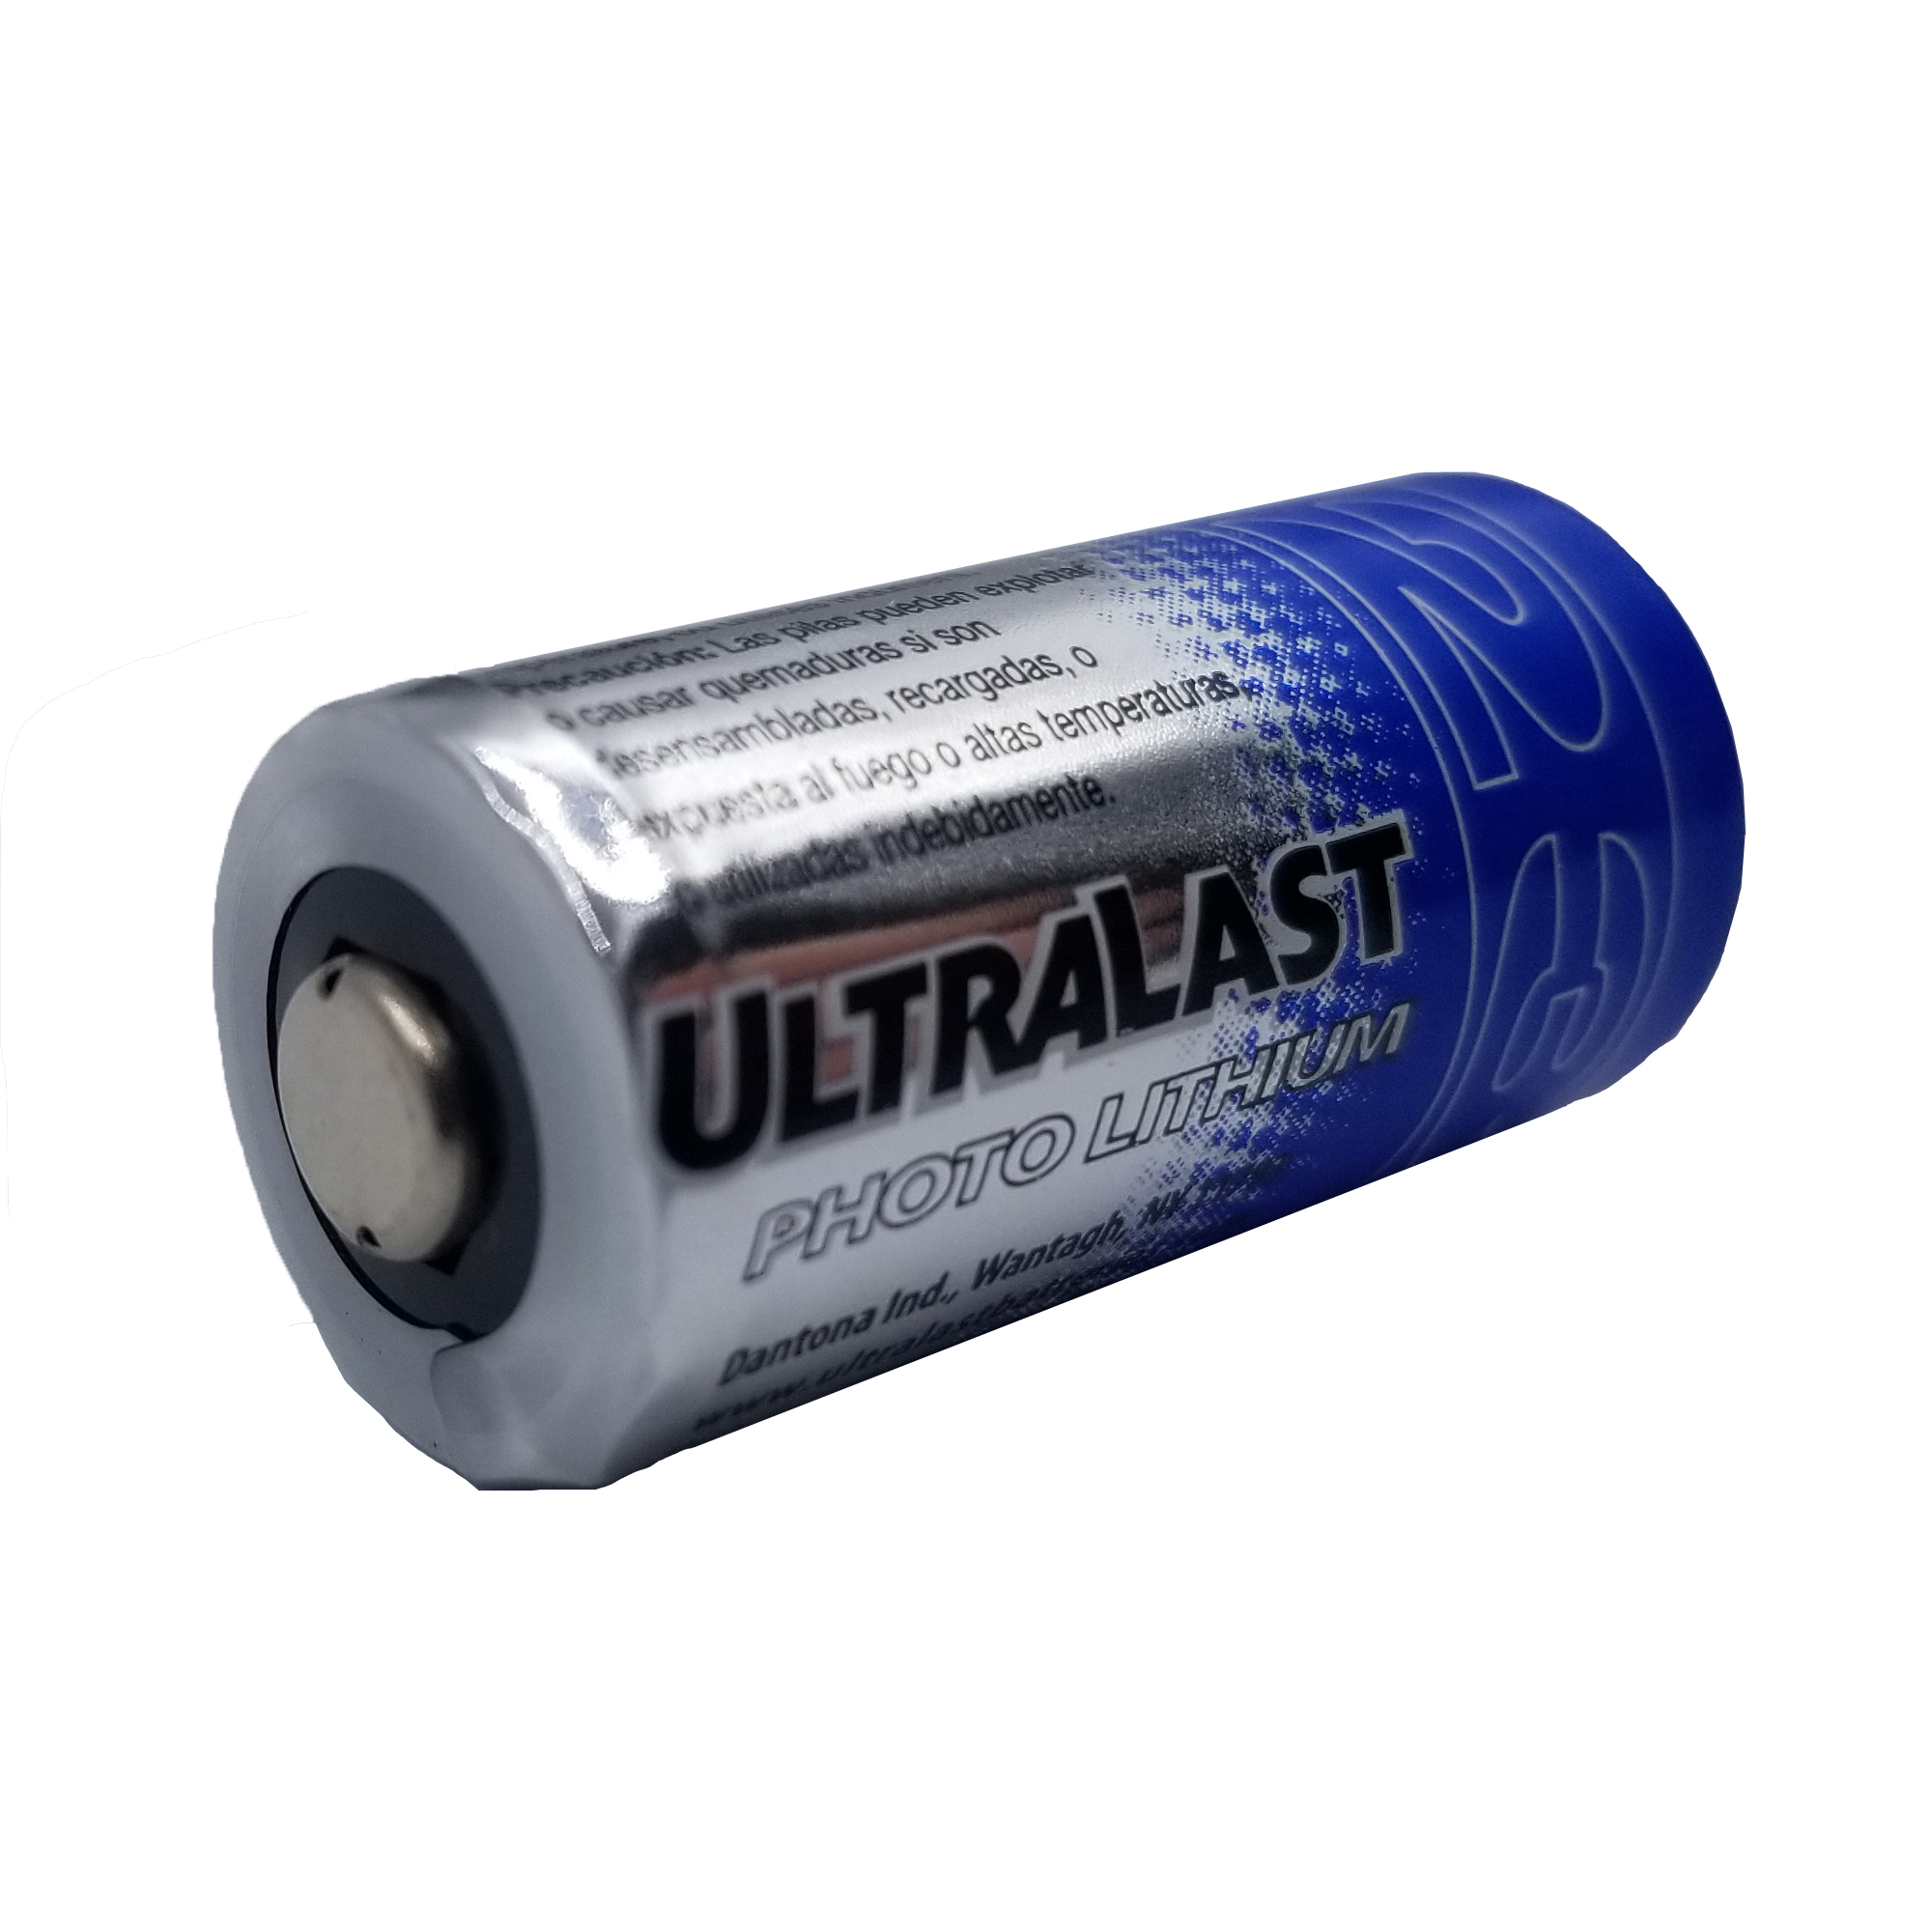 Batteries for Dorcy IntlFlashlight